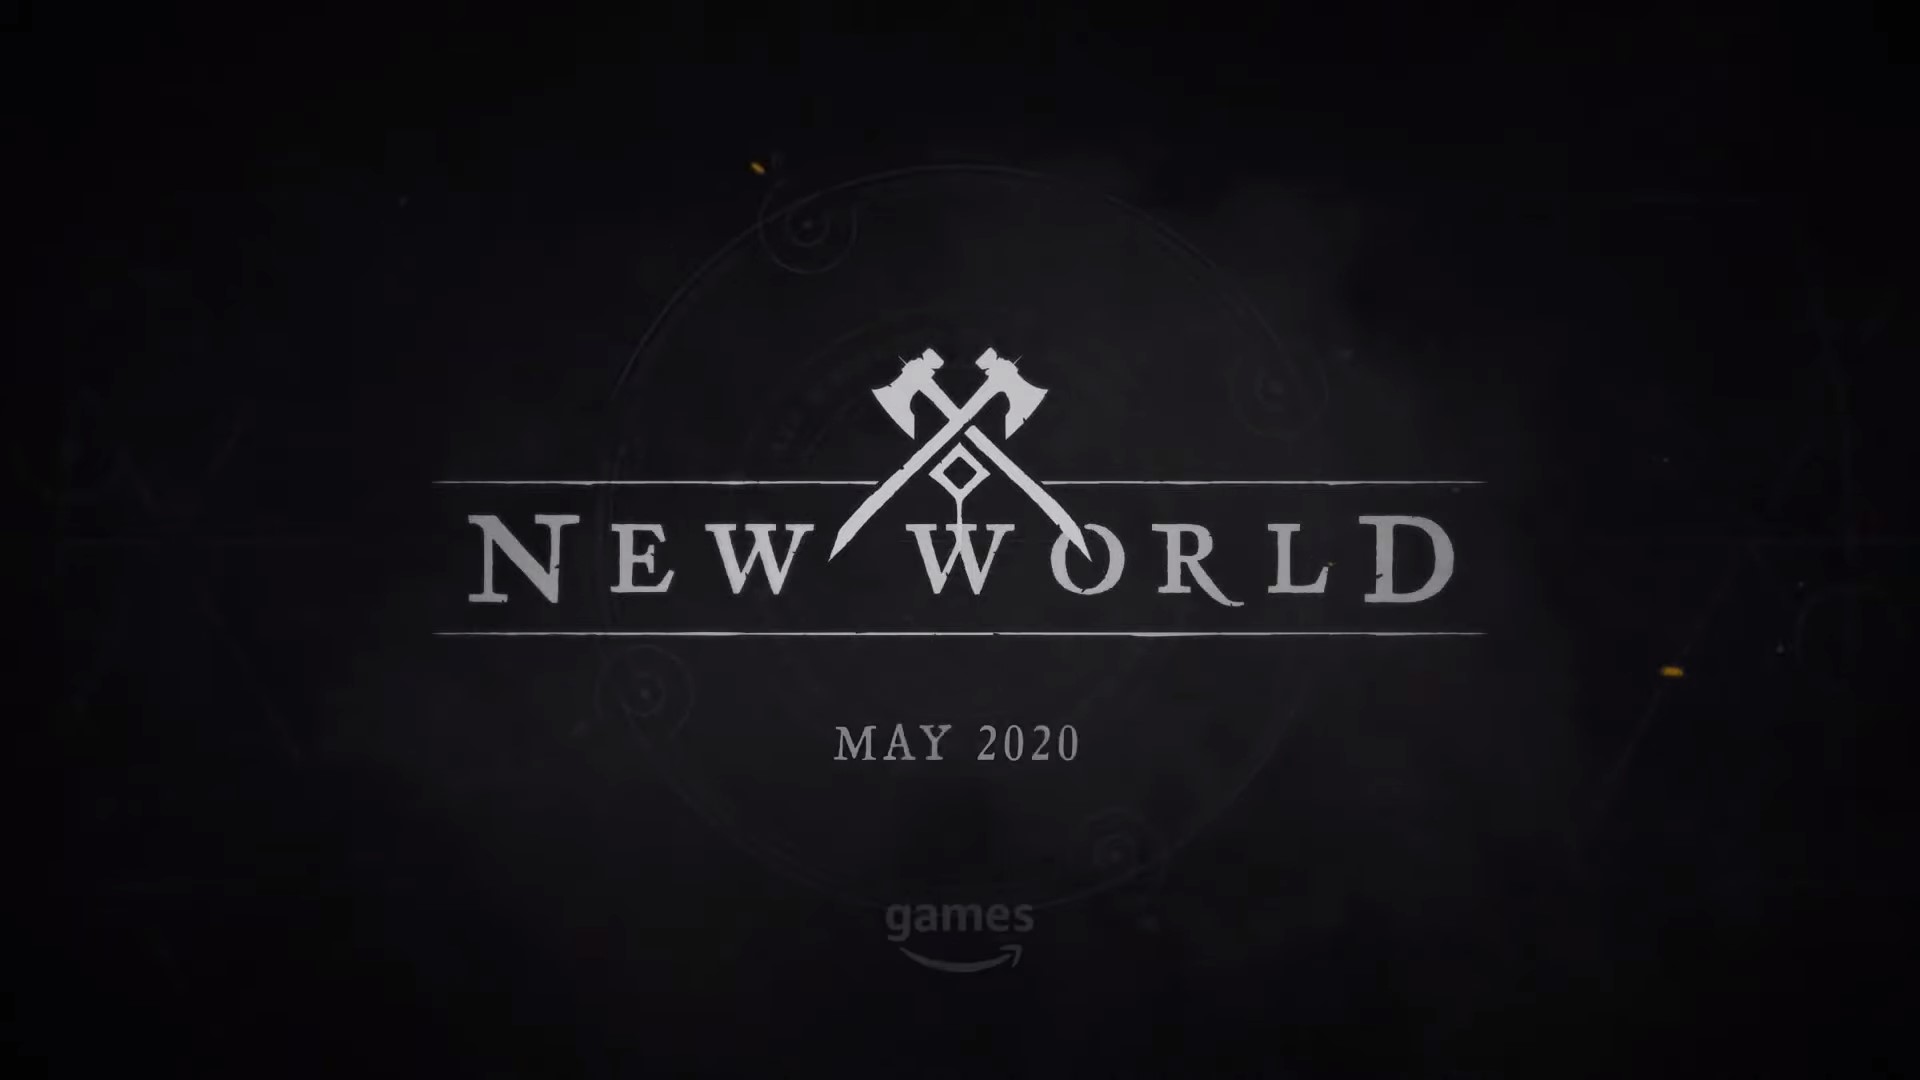 New world server